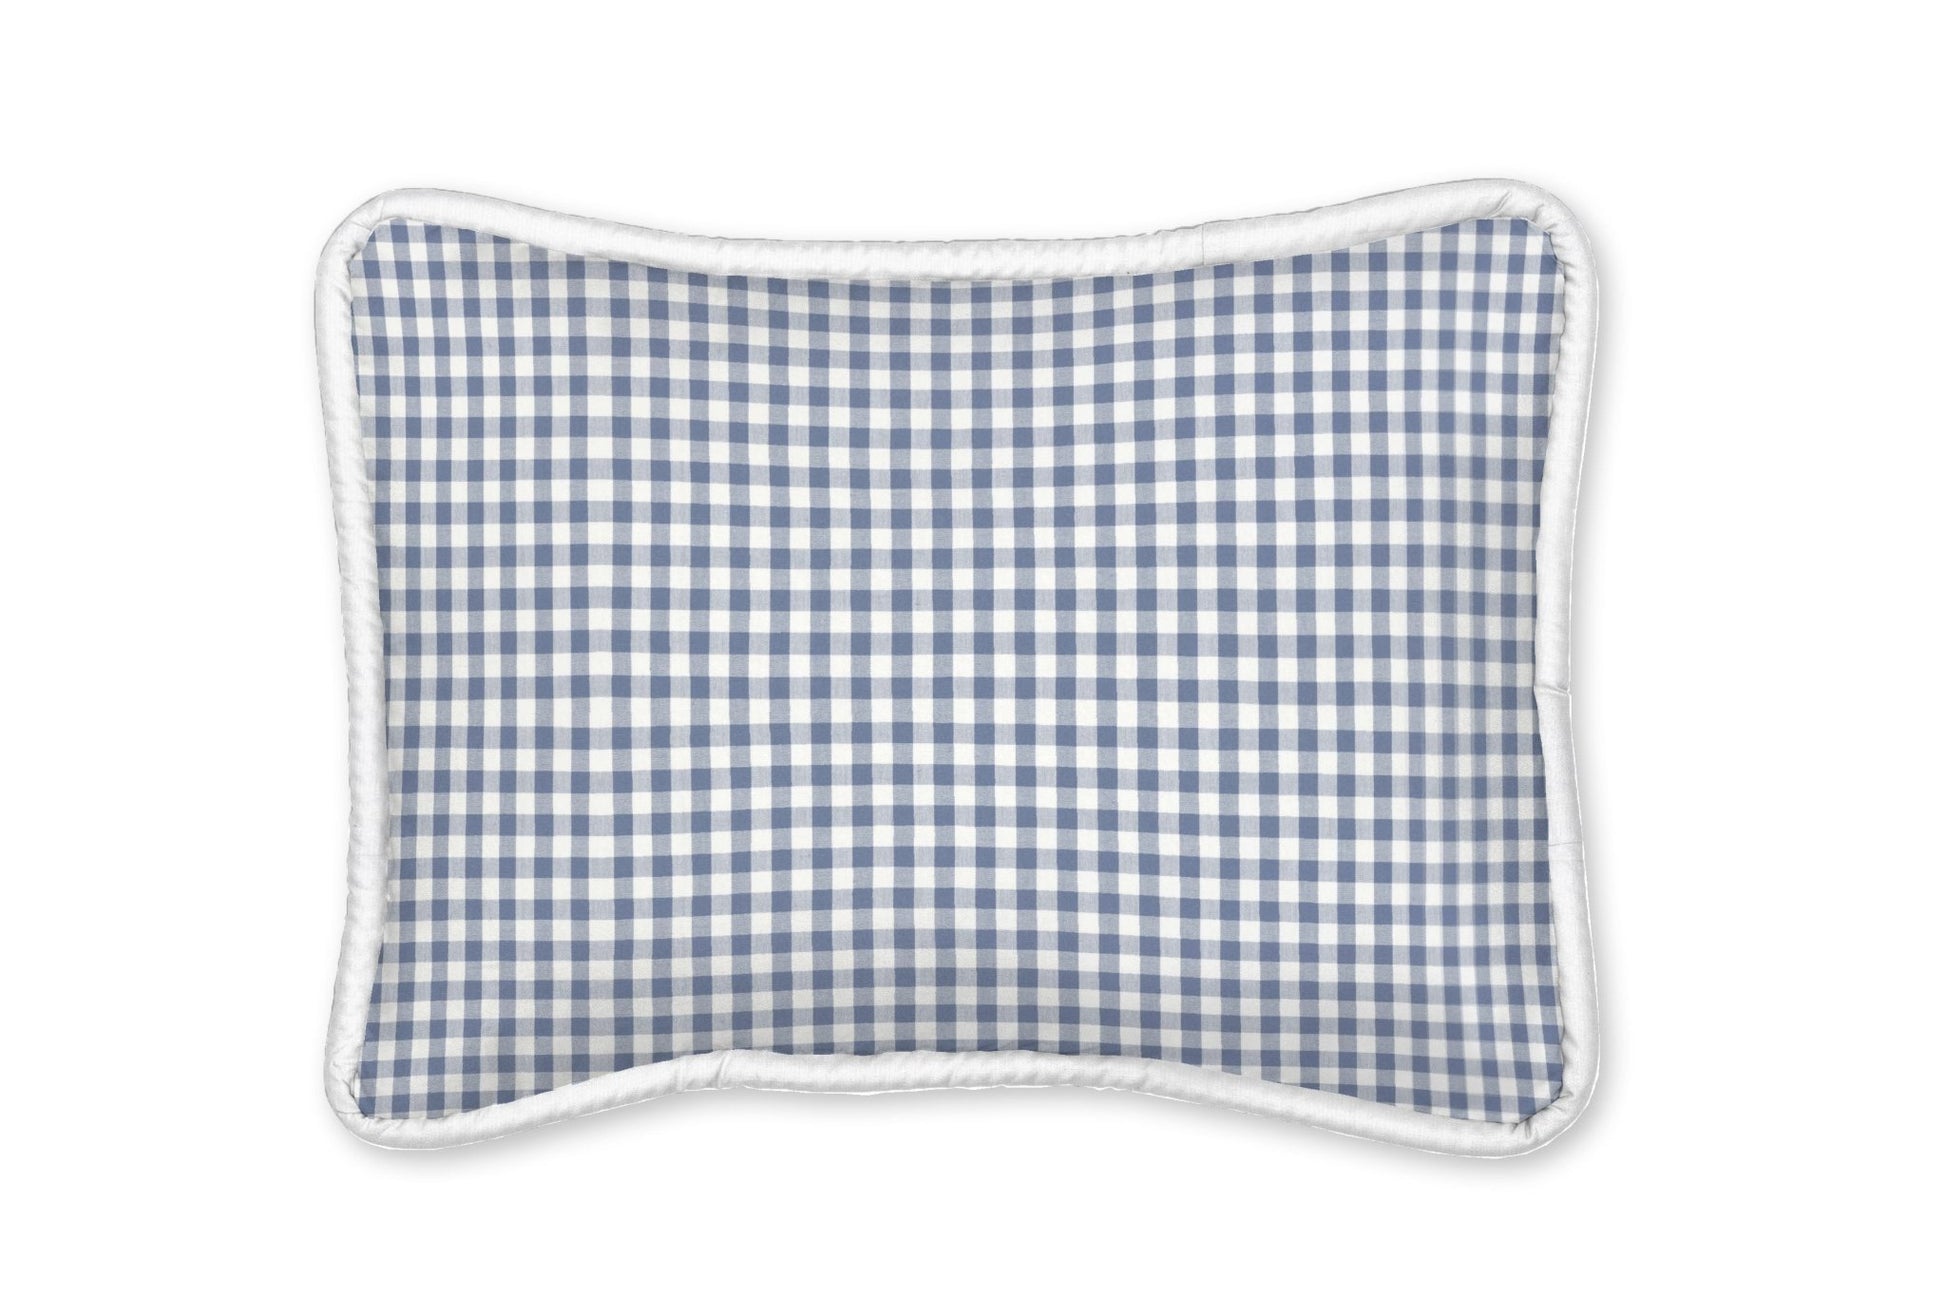 Slate Blue Gingham Decorative Pillow - New Arrivals Inc